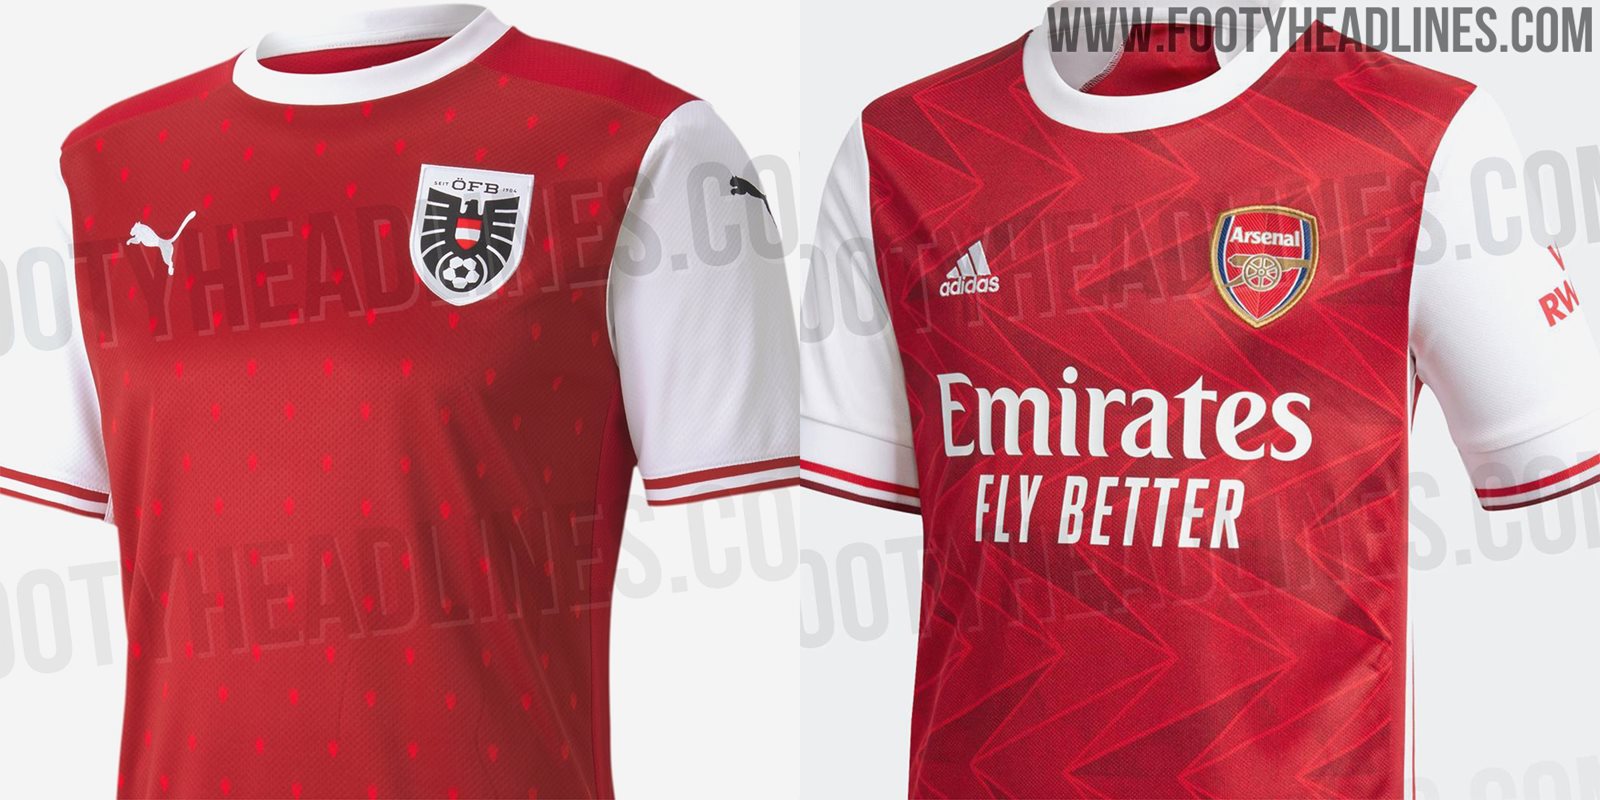 Escrutinio Cordero necesidad Odd Likeness: Adidas Arsenal 20-21 vs Puma Austria 2020 Home Kits - Footy  Headlines